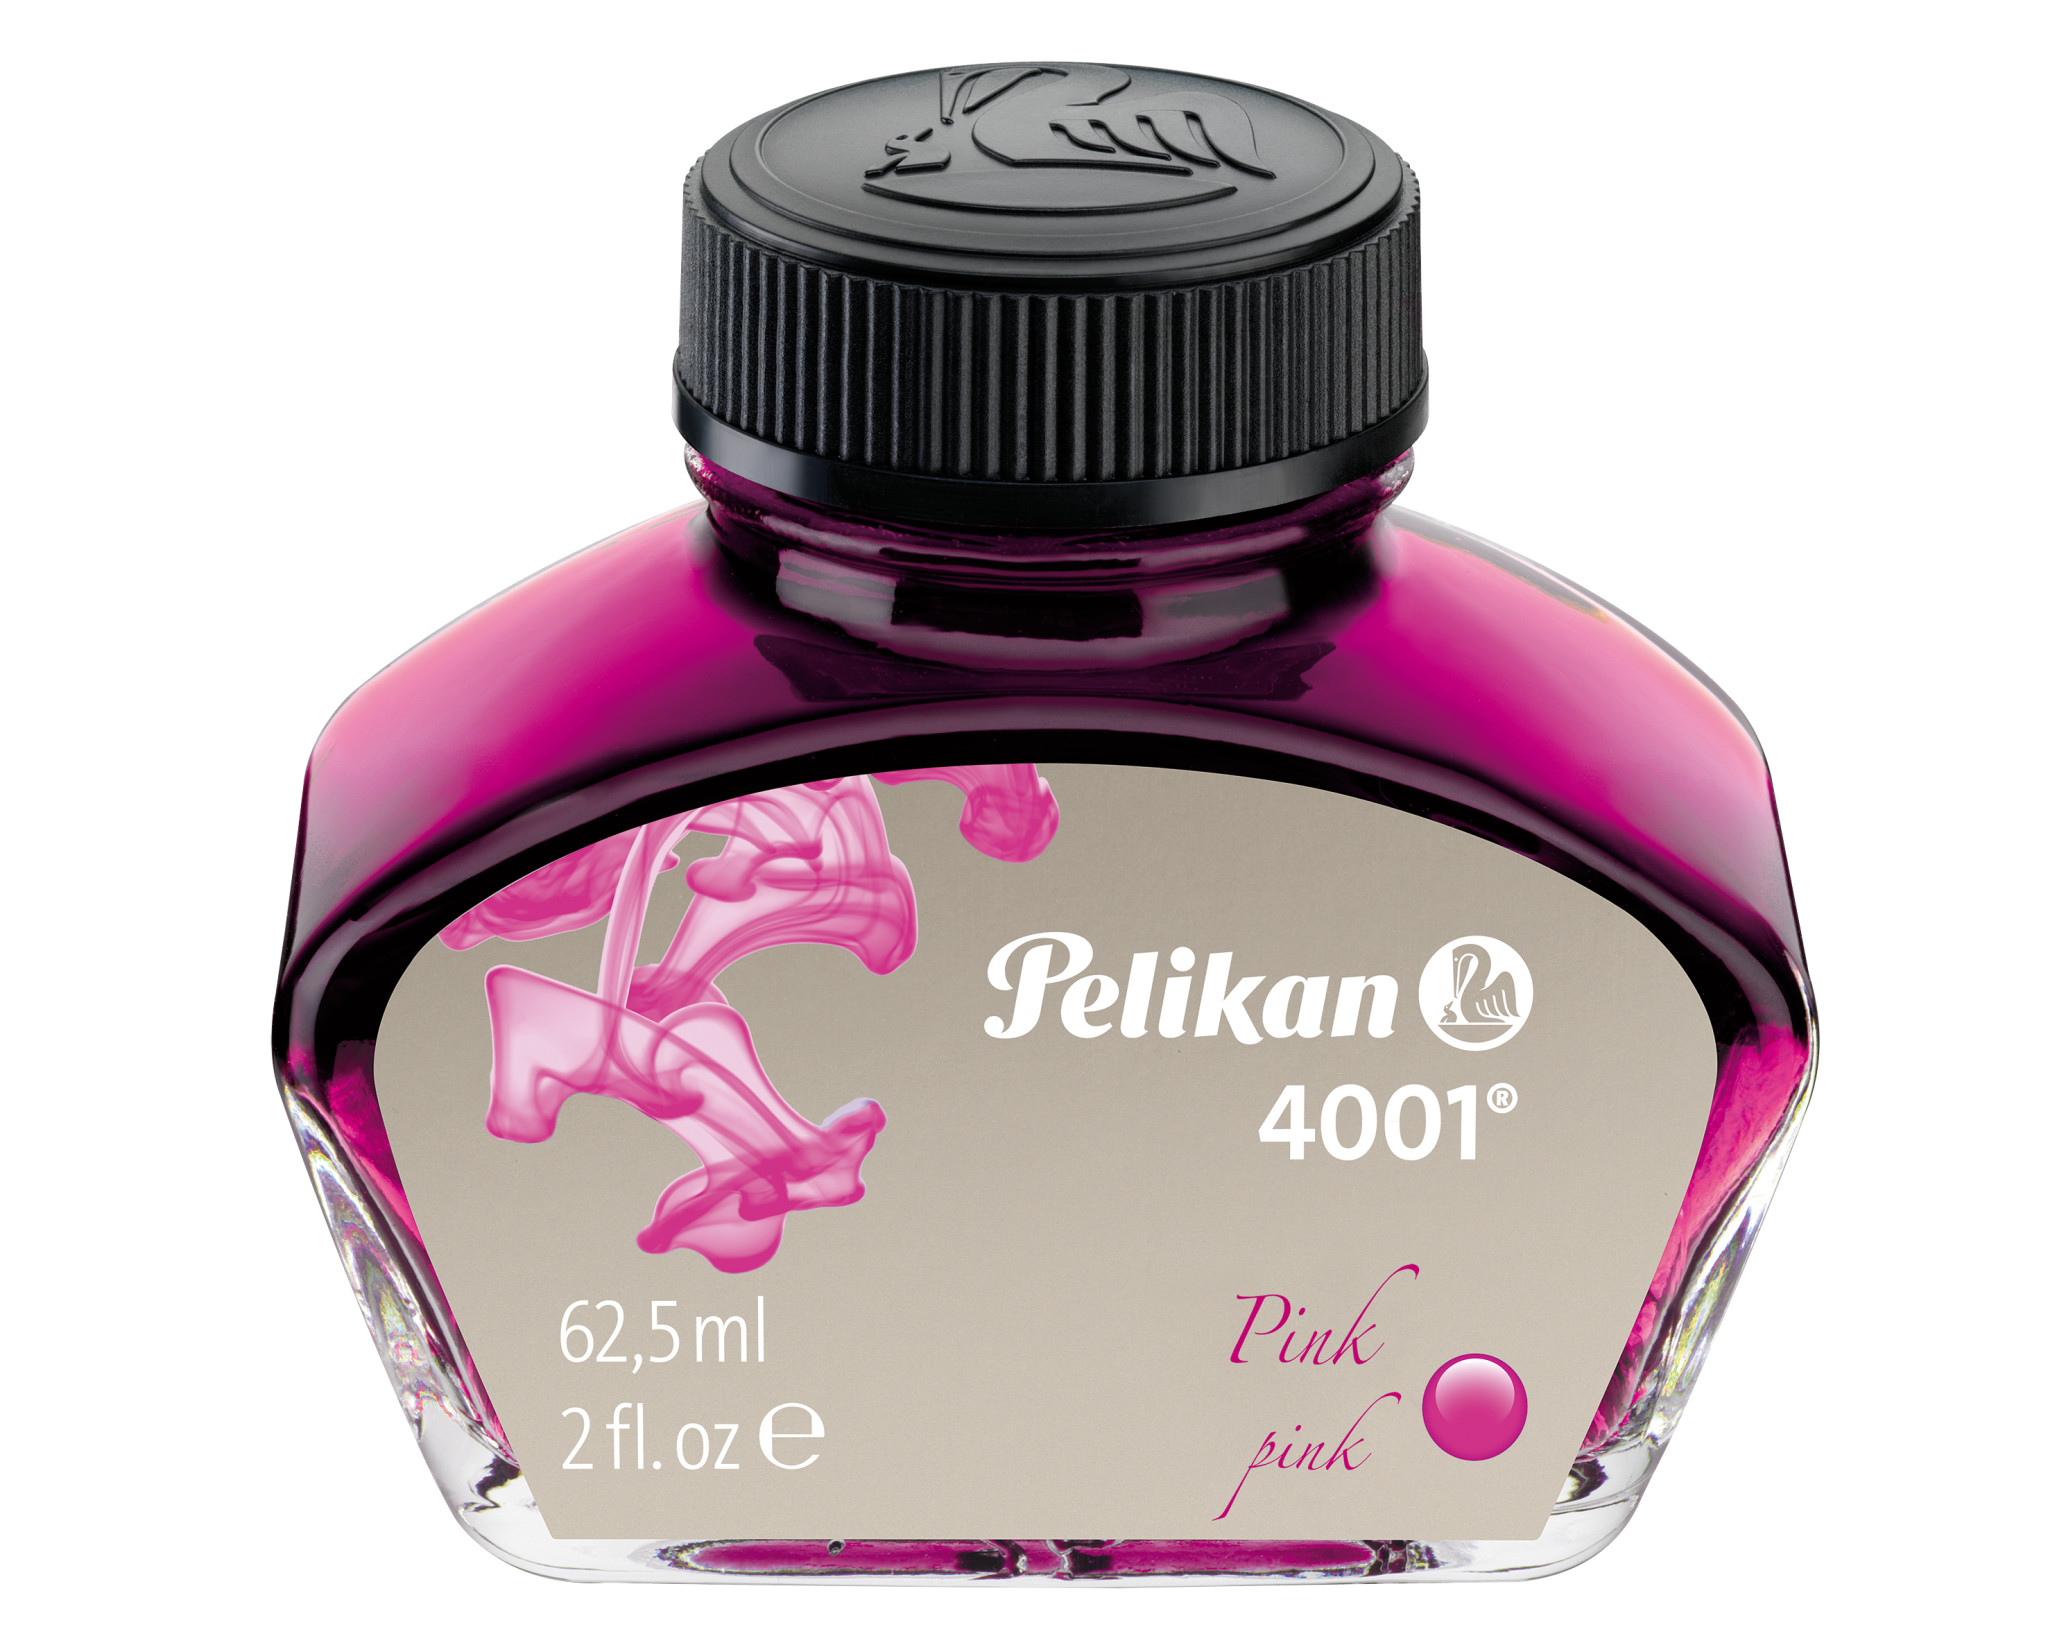 Pelikan 4001® Ink Pink, Glass 62.5ml